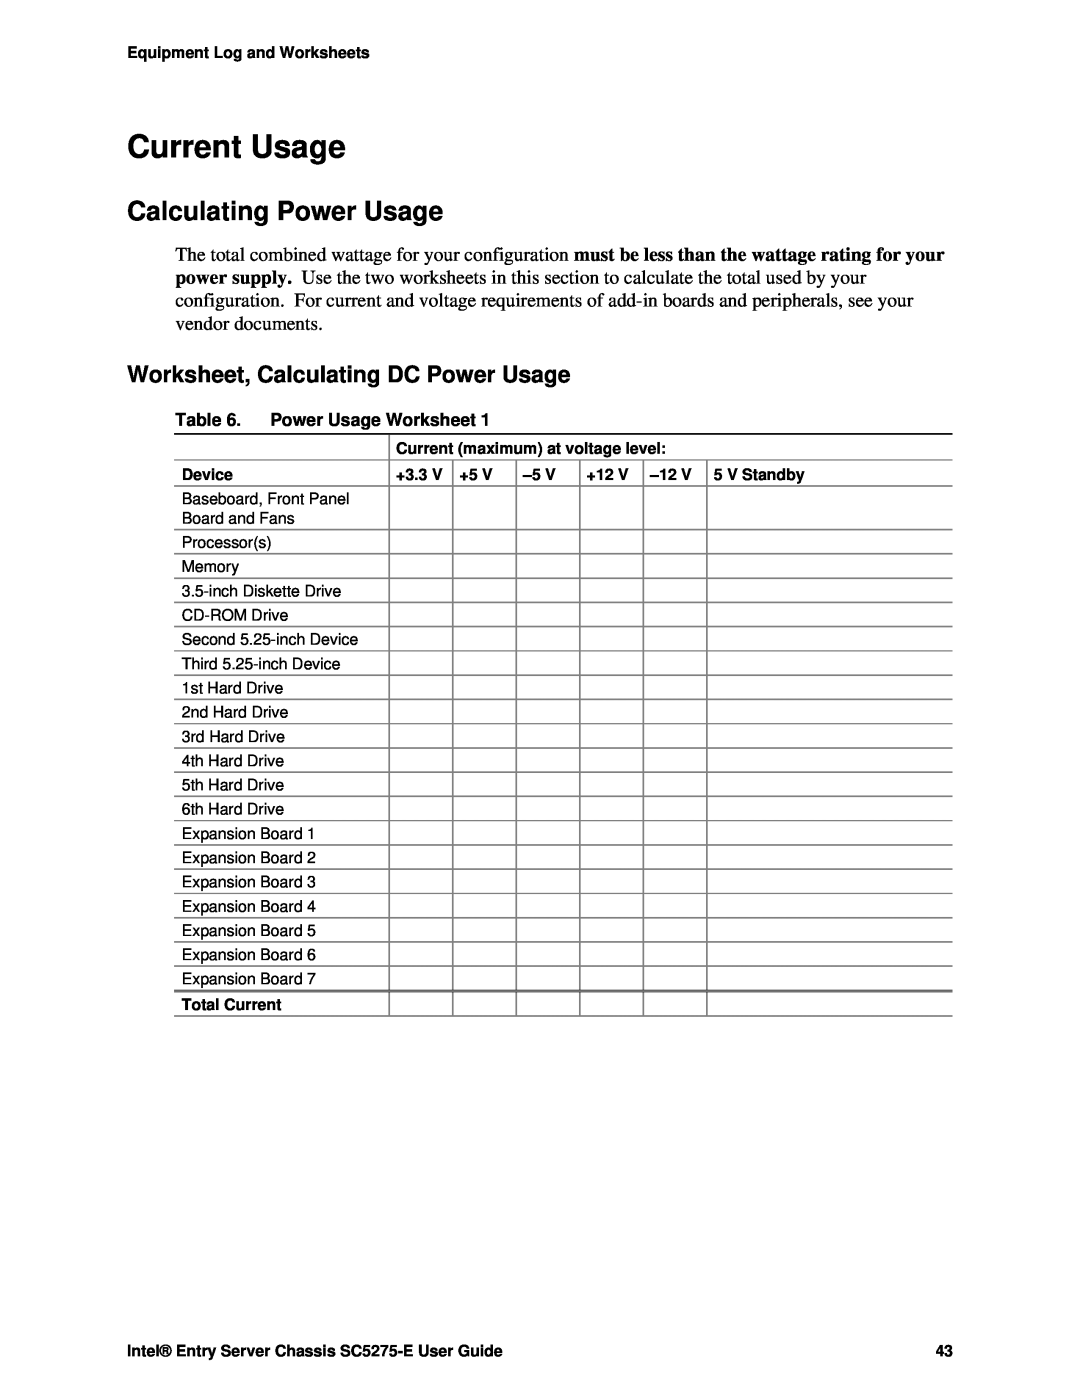 Intel C50277-001, SC5275-E manual Current Usage, Calculating Power Usage, Worksheet, Calculating DC Power Usage 